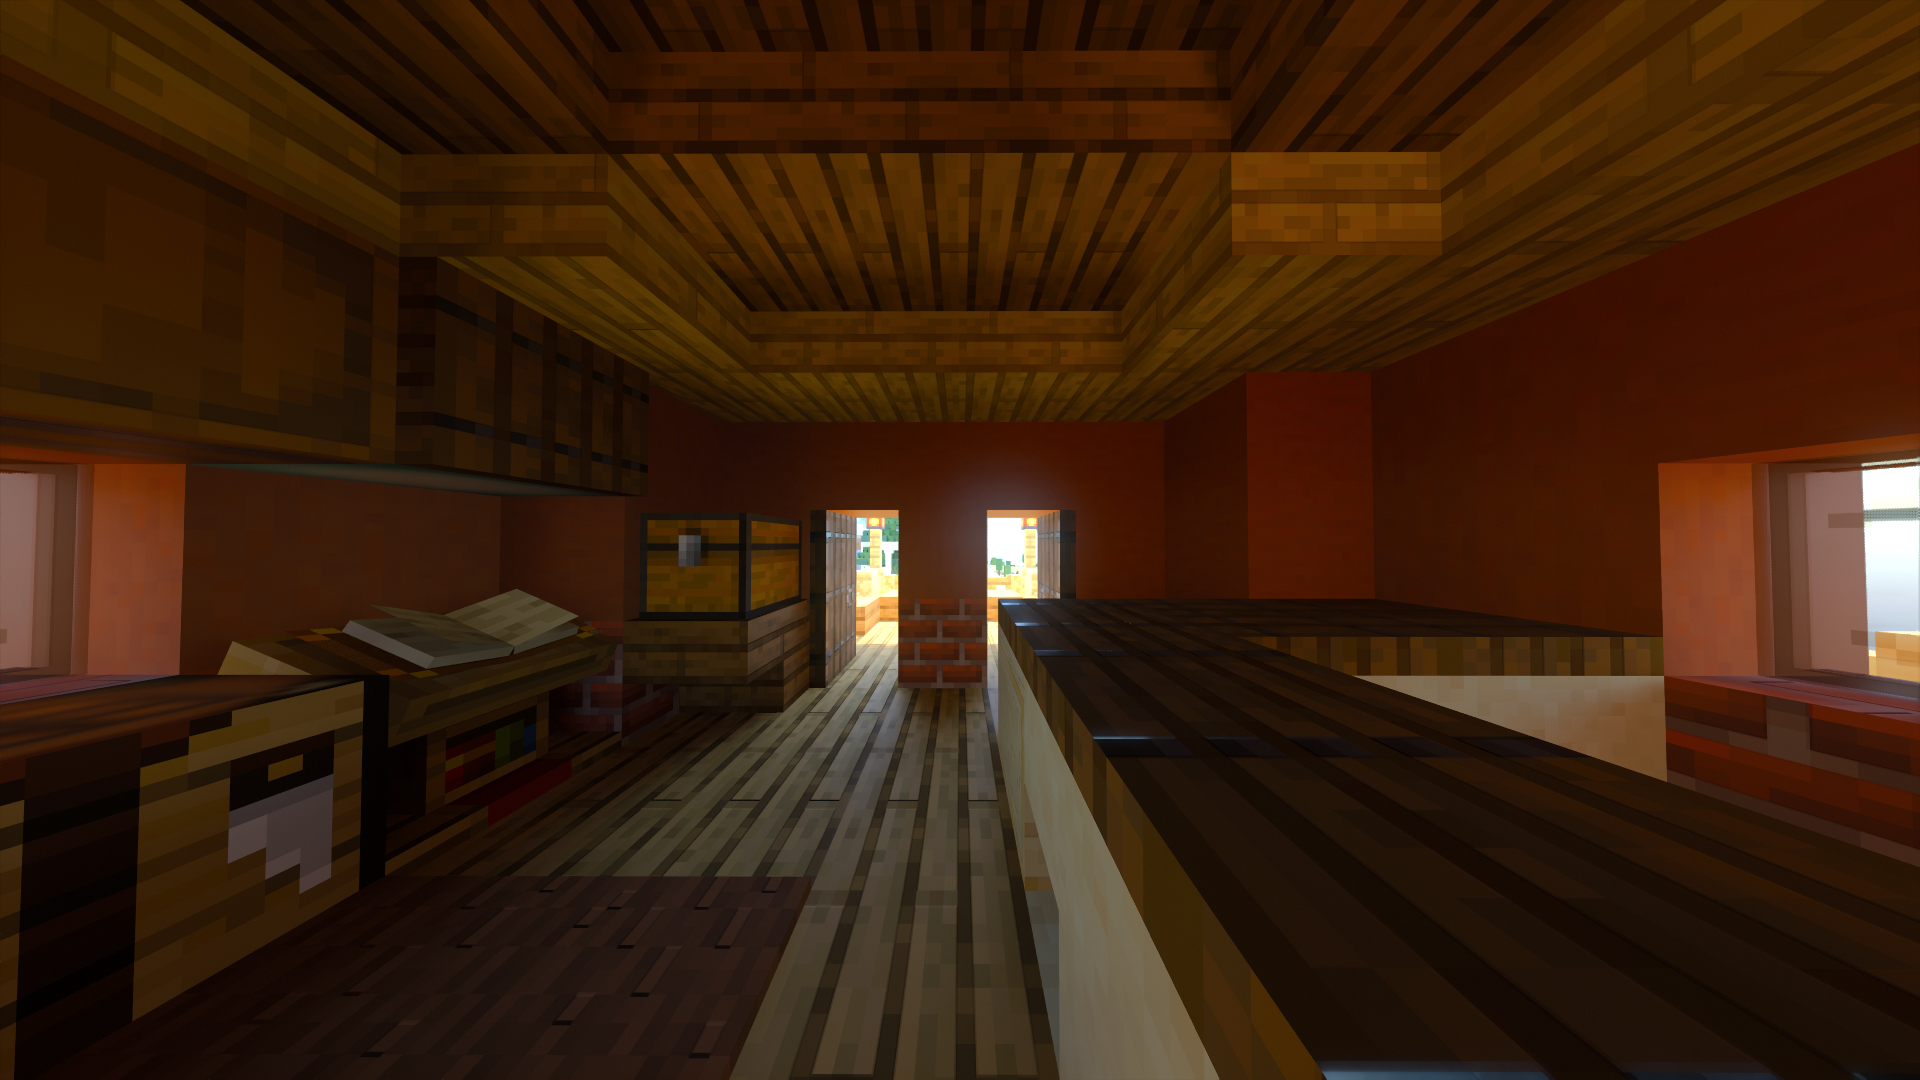 General 1920x1080 Minecraft screen shot Nvidia RTX video games video game art chests interior sunlight CGI wood books floor